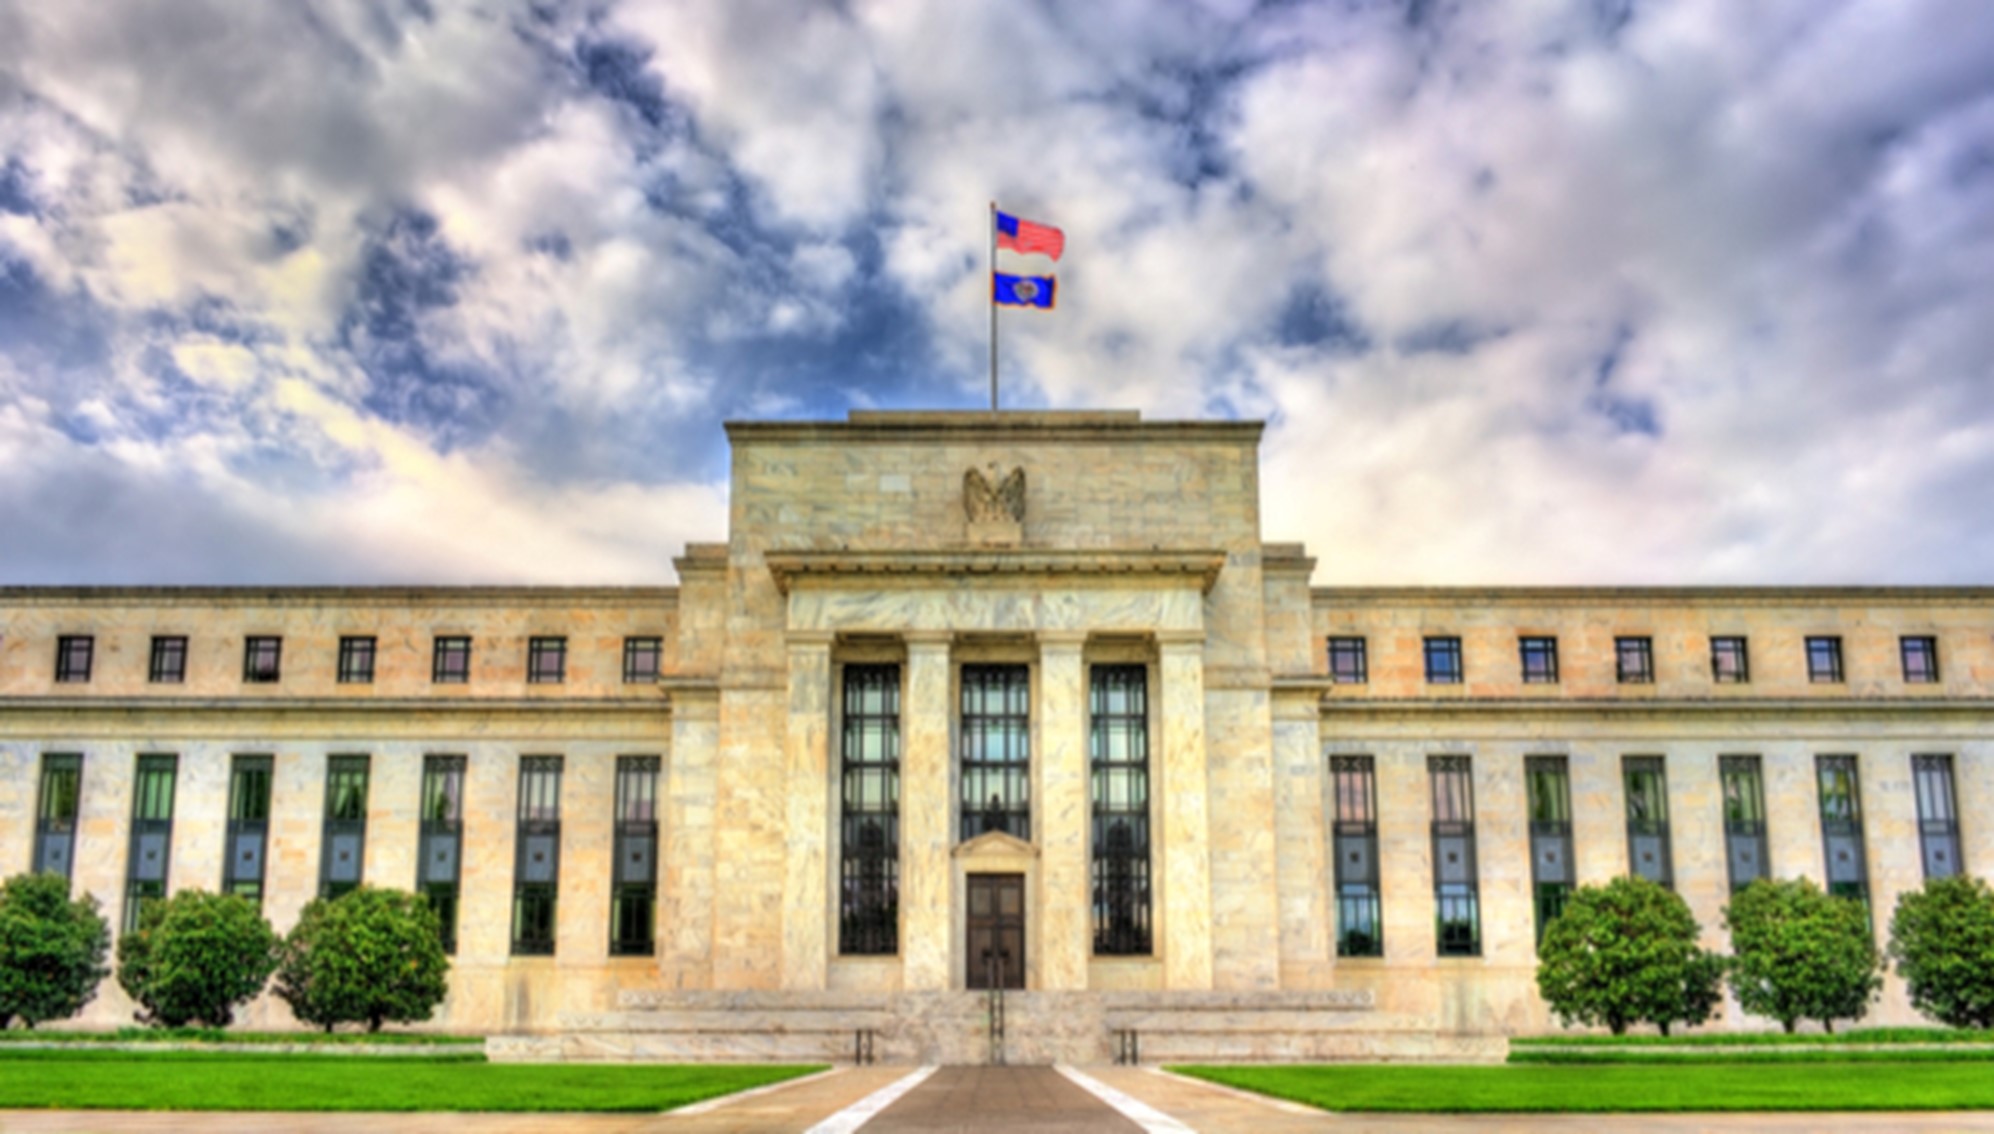 Federal Reserve Bank (FED)